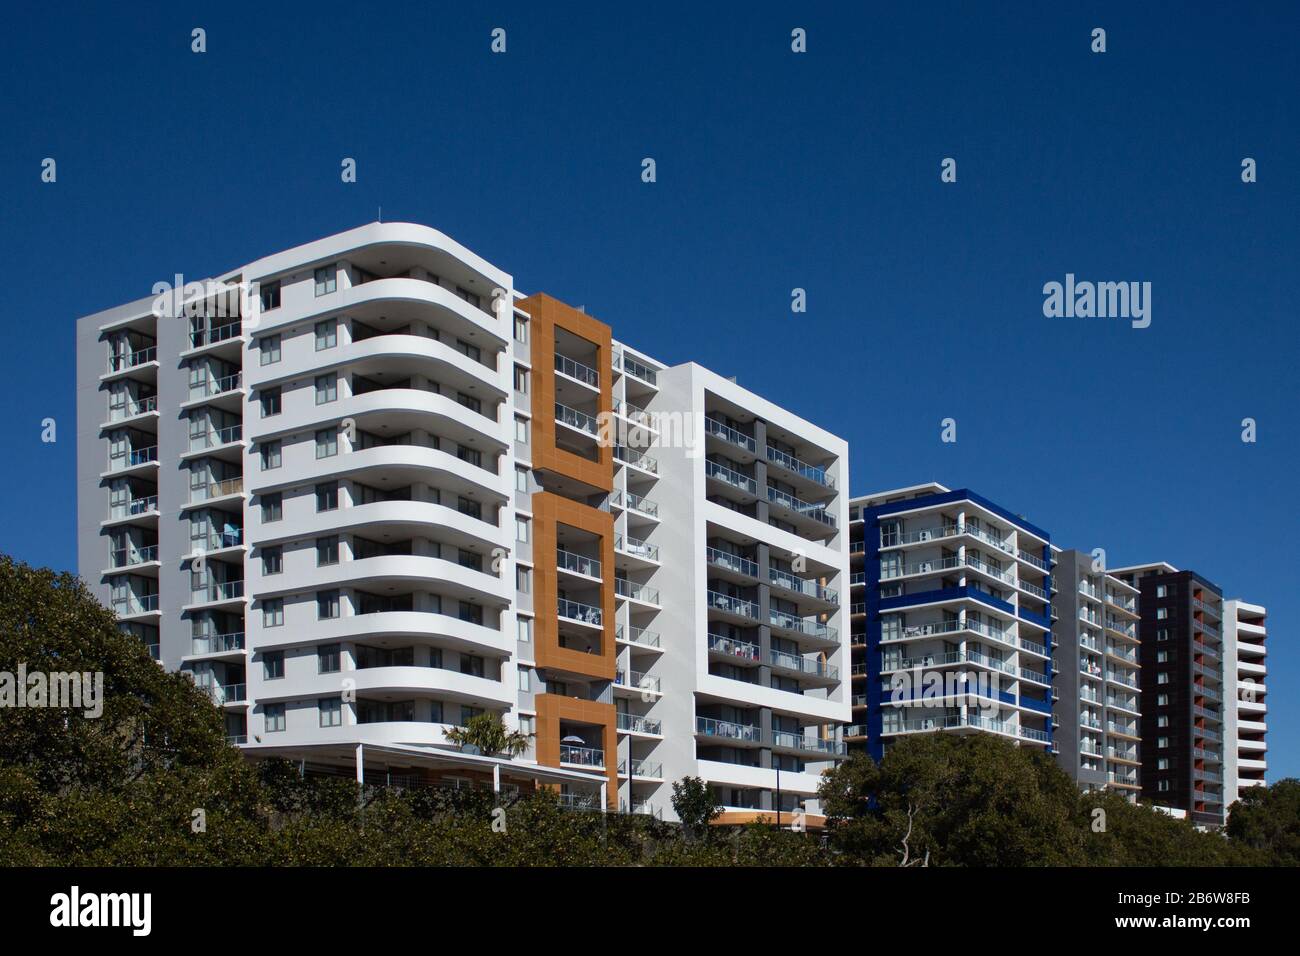 Urban high rise apartment condominiums community against blue sky Stock Photo